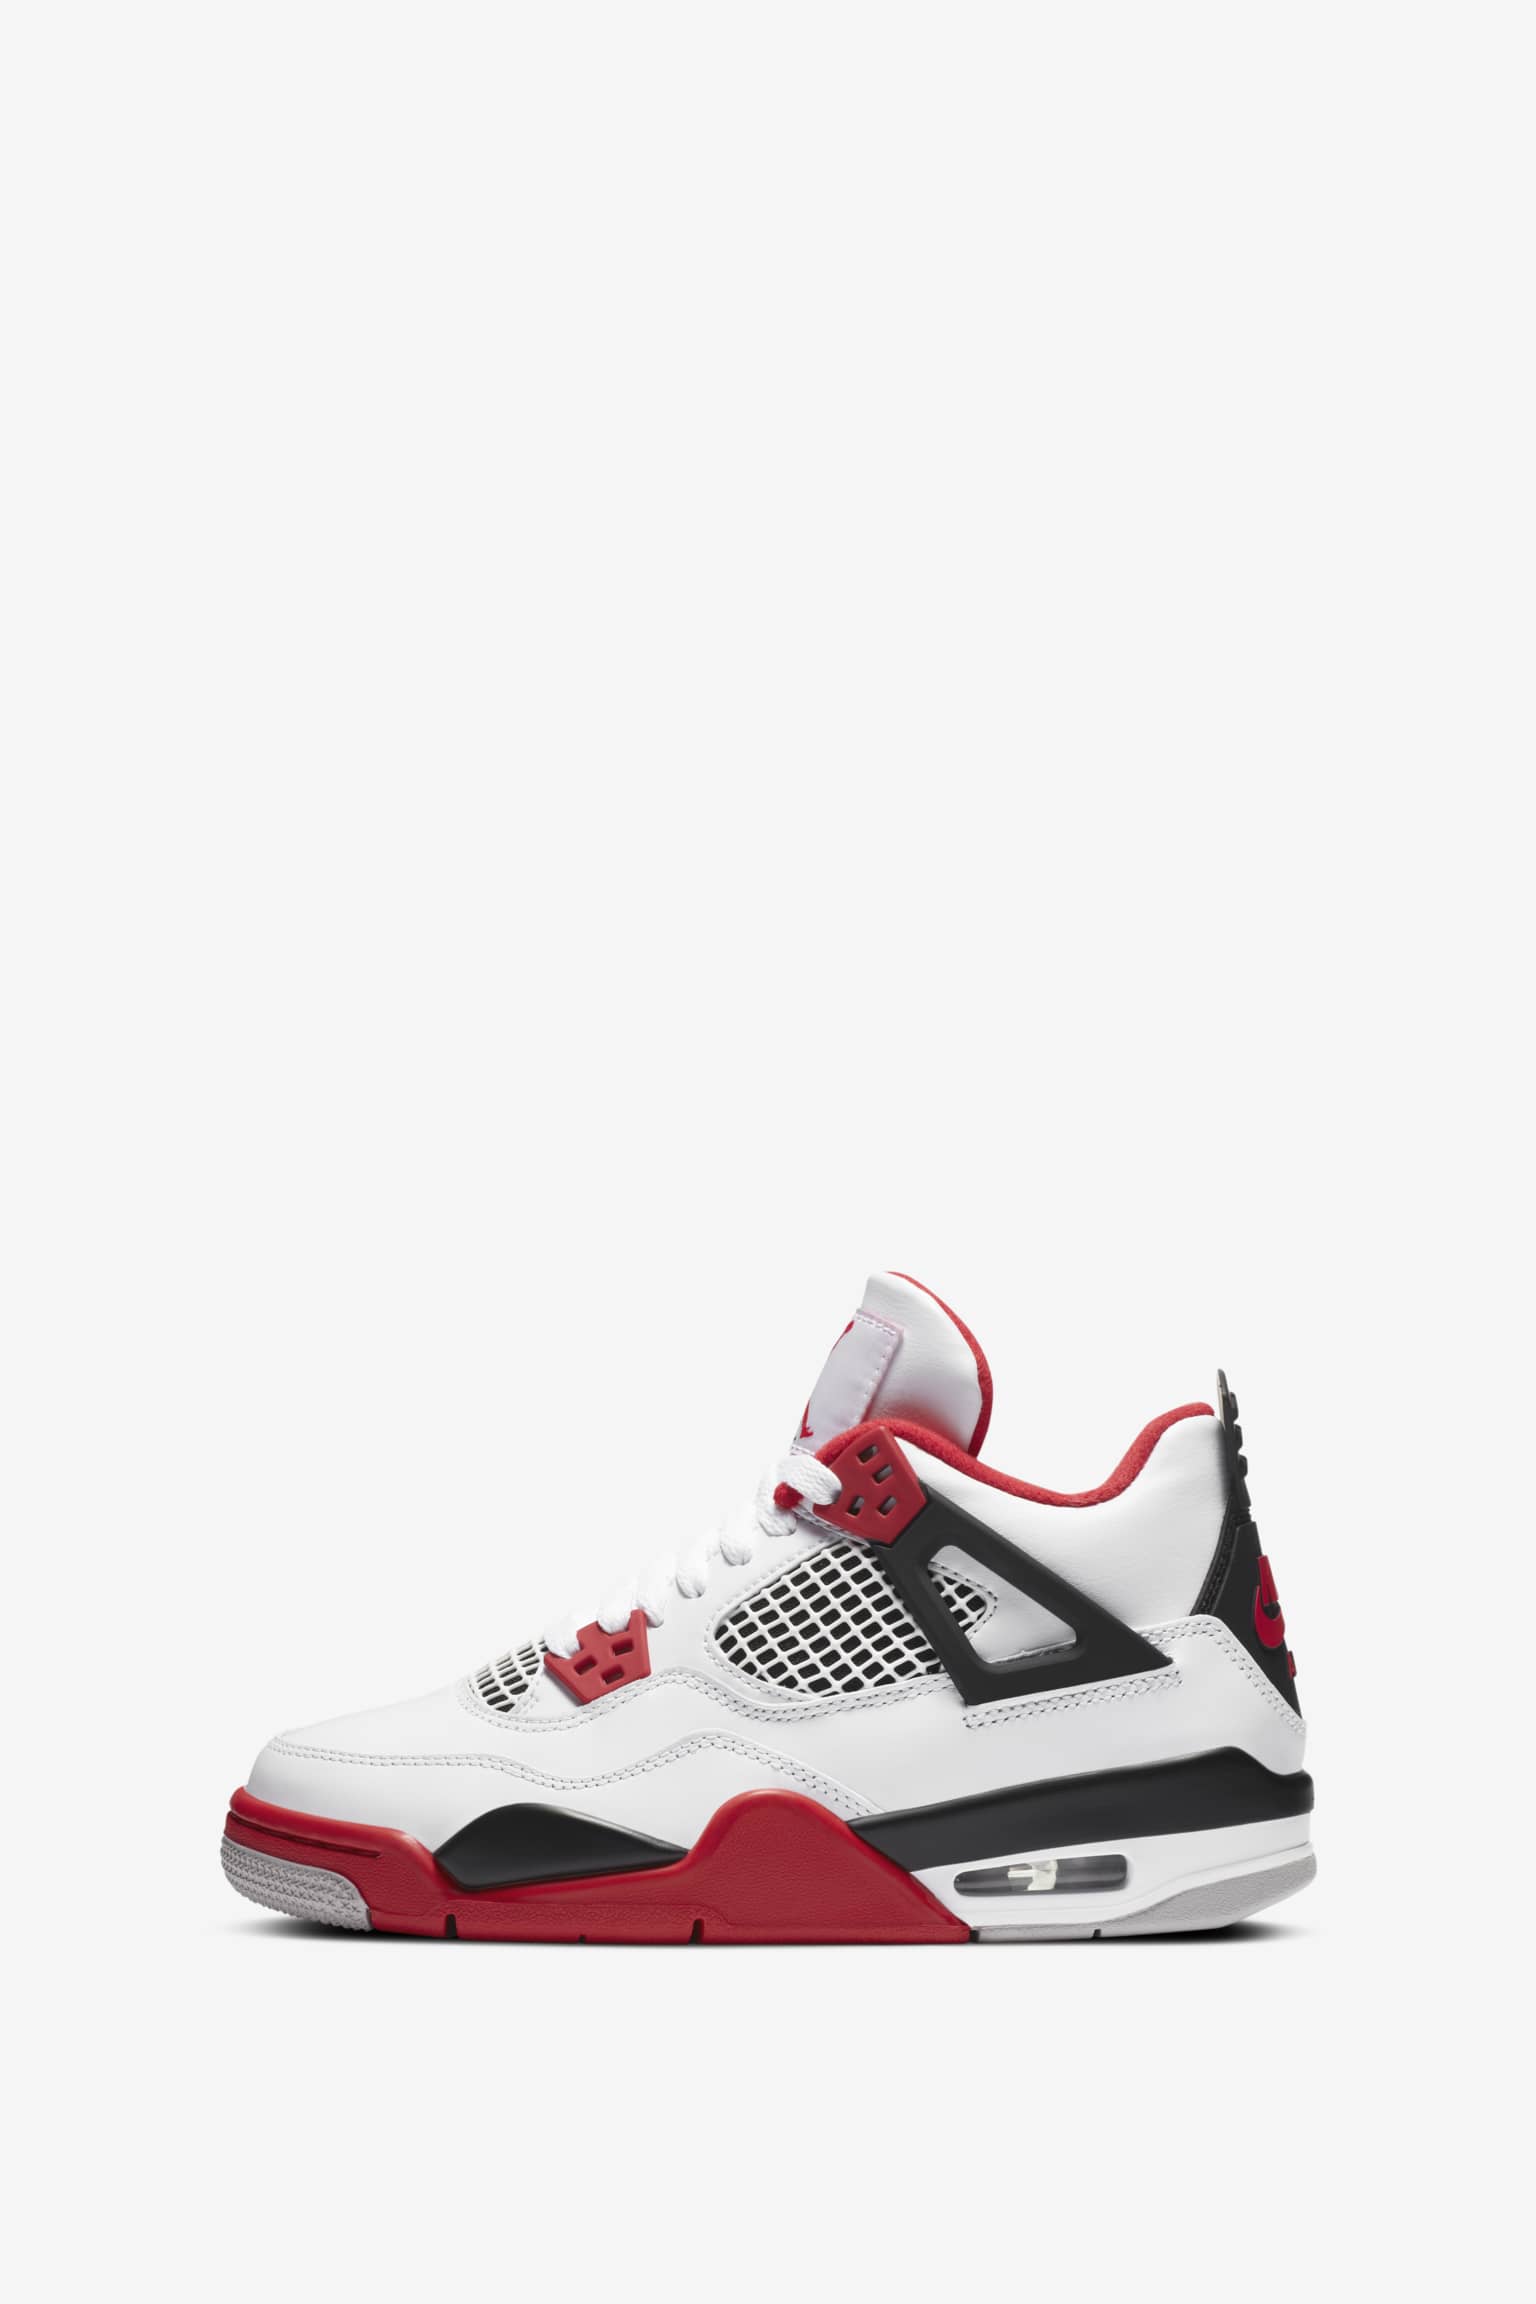 Air Jordan 4 'Fire Red' Release Date. Nike SNKRS IN